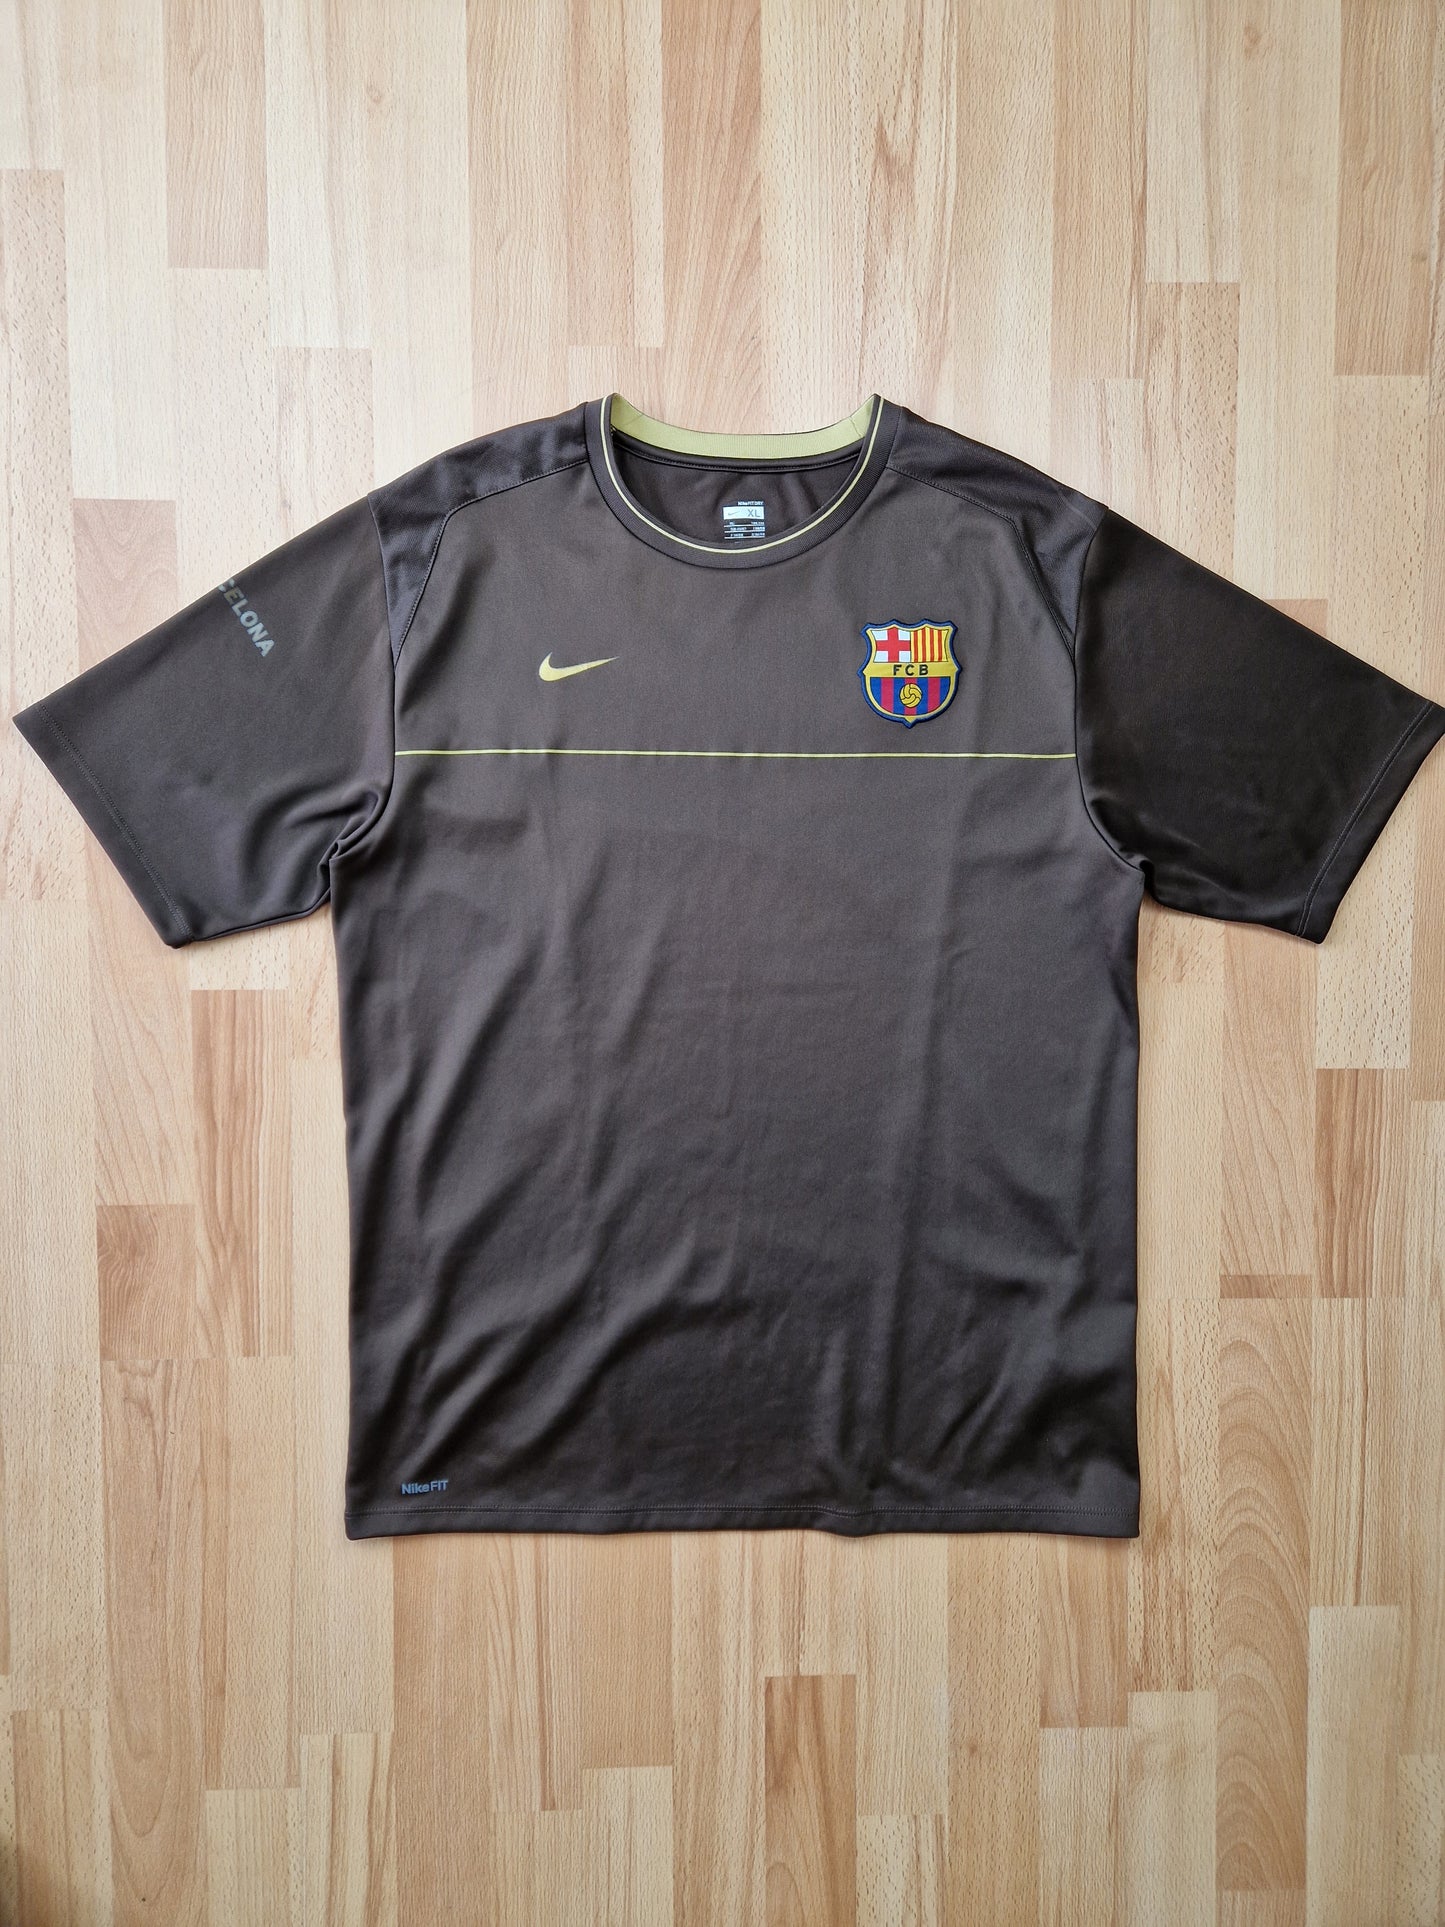 08-09 Nike Barcelona Training Kit (L/XL)